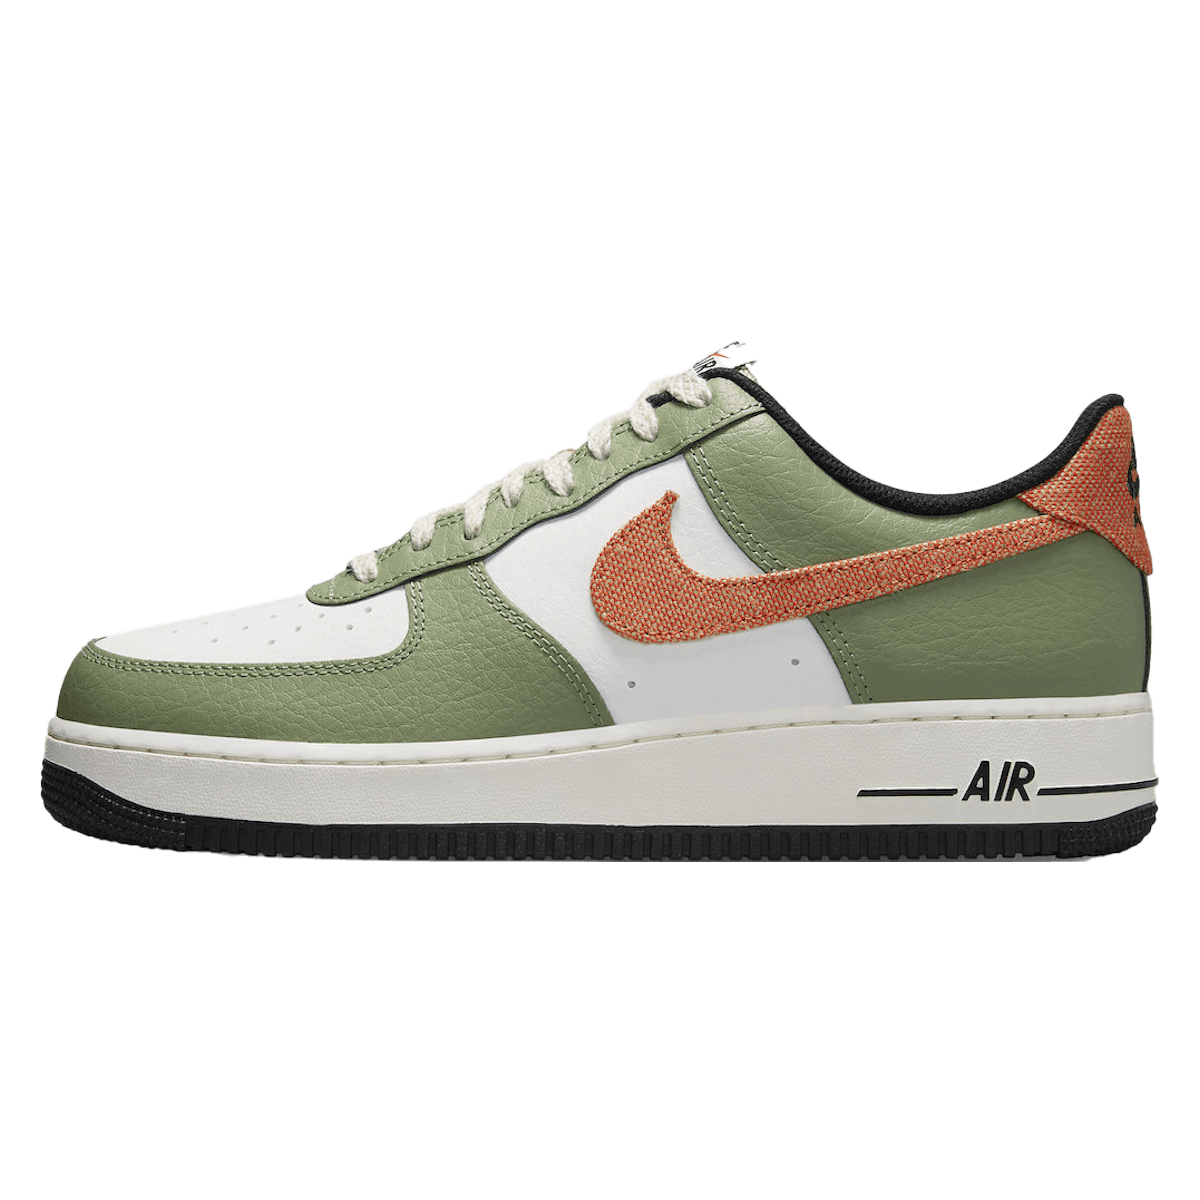 Nike Air Force 1 Low "Oil Green"